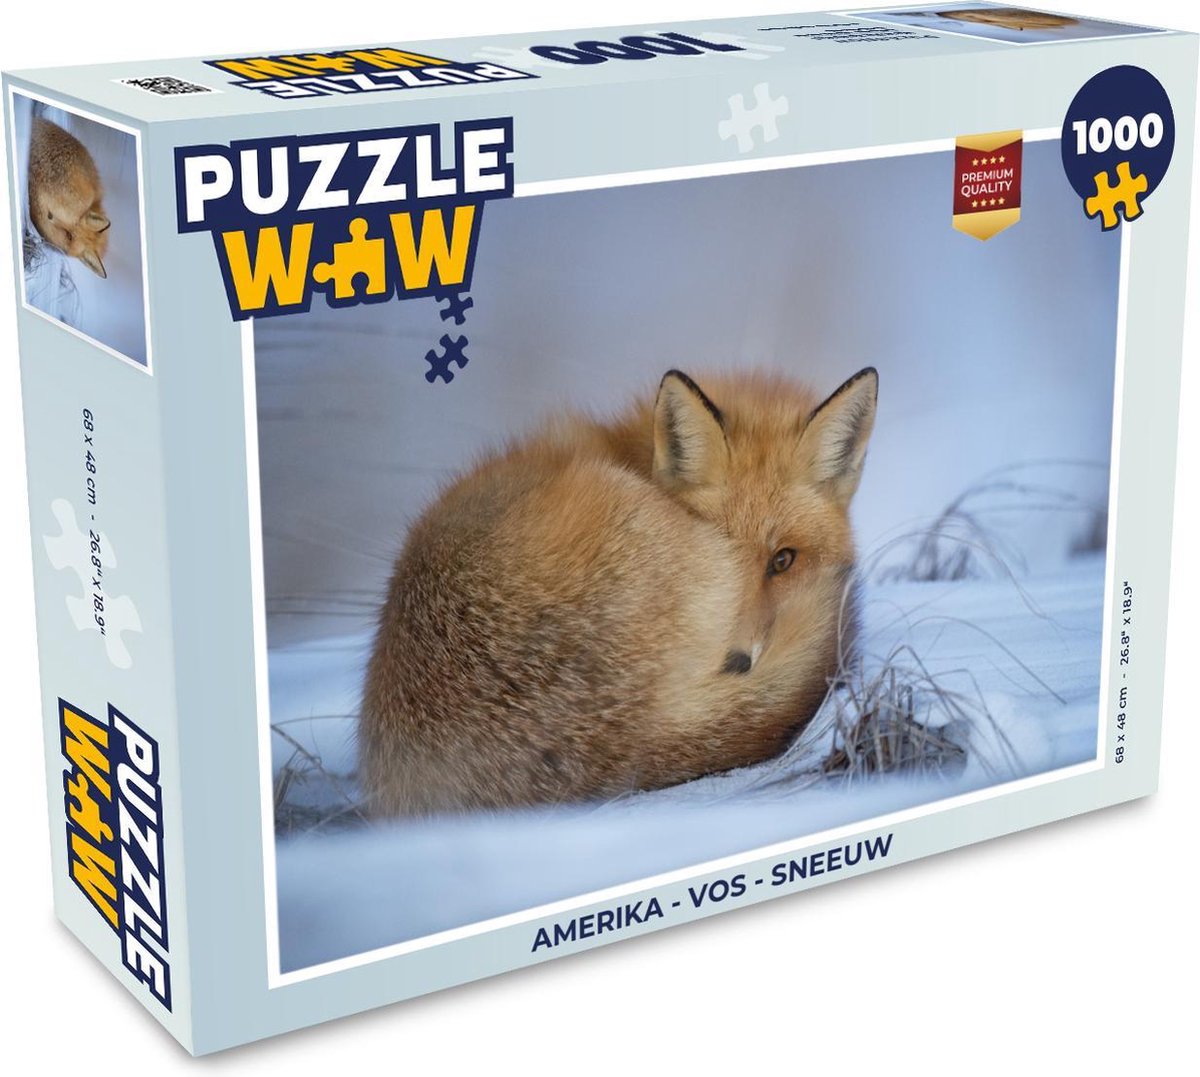 Afbeelding van product PuzzleWow  Puzzel Amerika - Vos - Sneeuw - Legpuzzel - Puzzel 1000 stukjes volwassenen